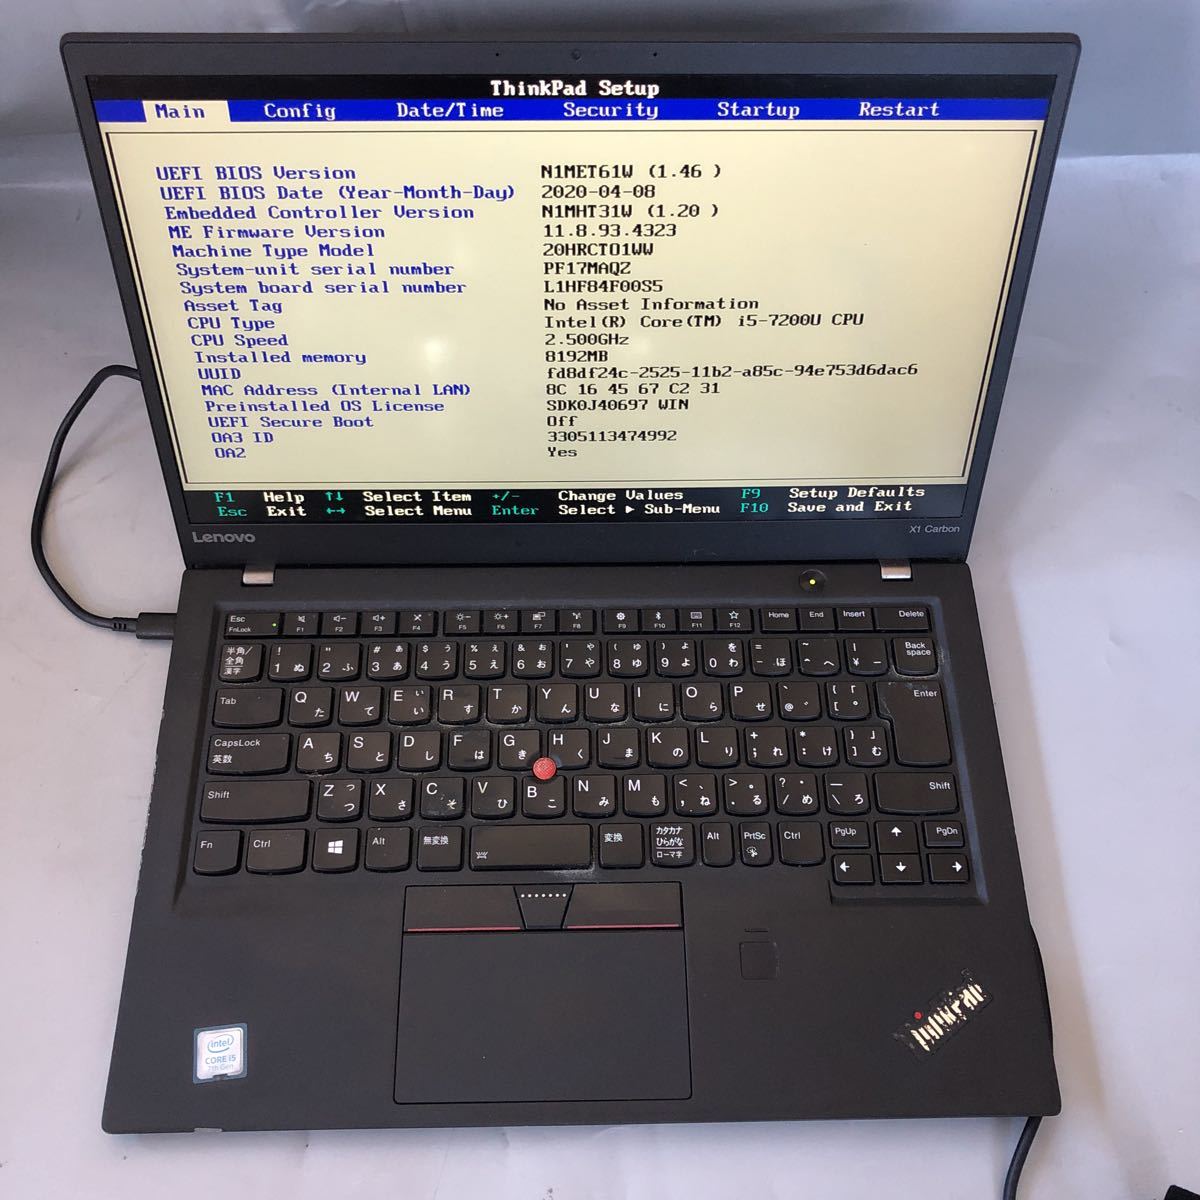 JXJK3559 【ジャンク】Lenovo ThinkPad X1 Carbon /Core i5-7200U 2.50GHz/ メモリ:8GB / カメラ /動作未確認/BIOS確認済